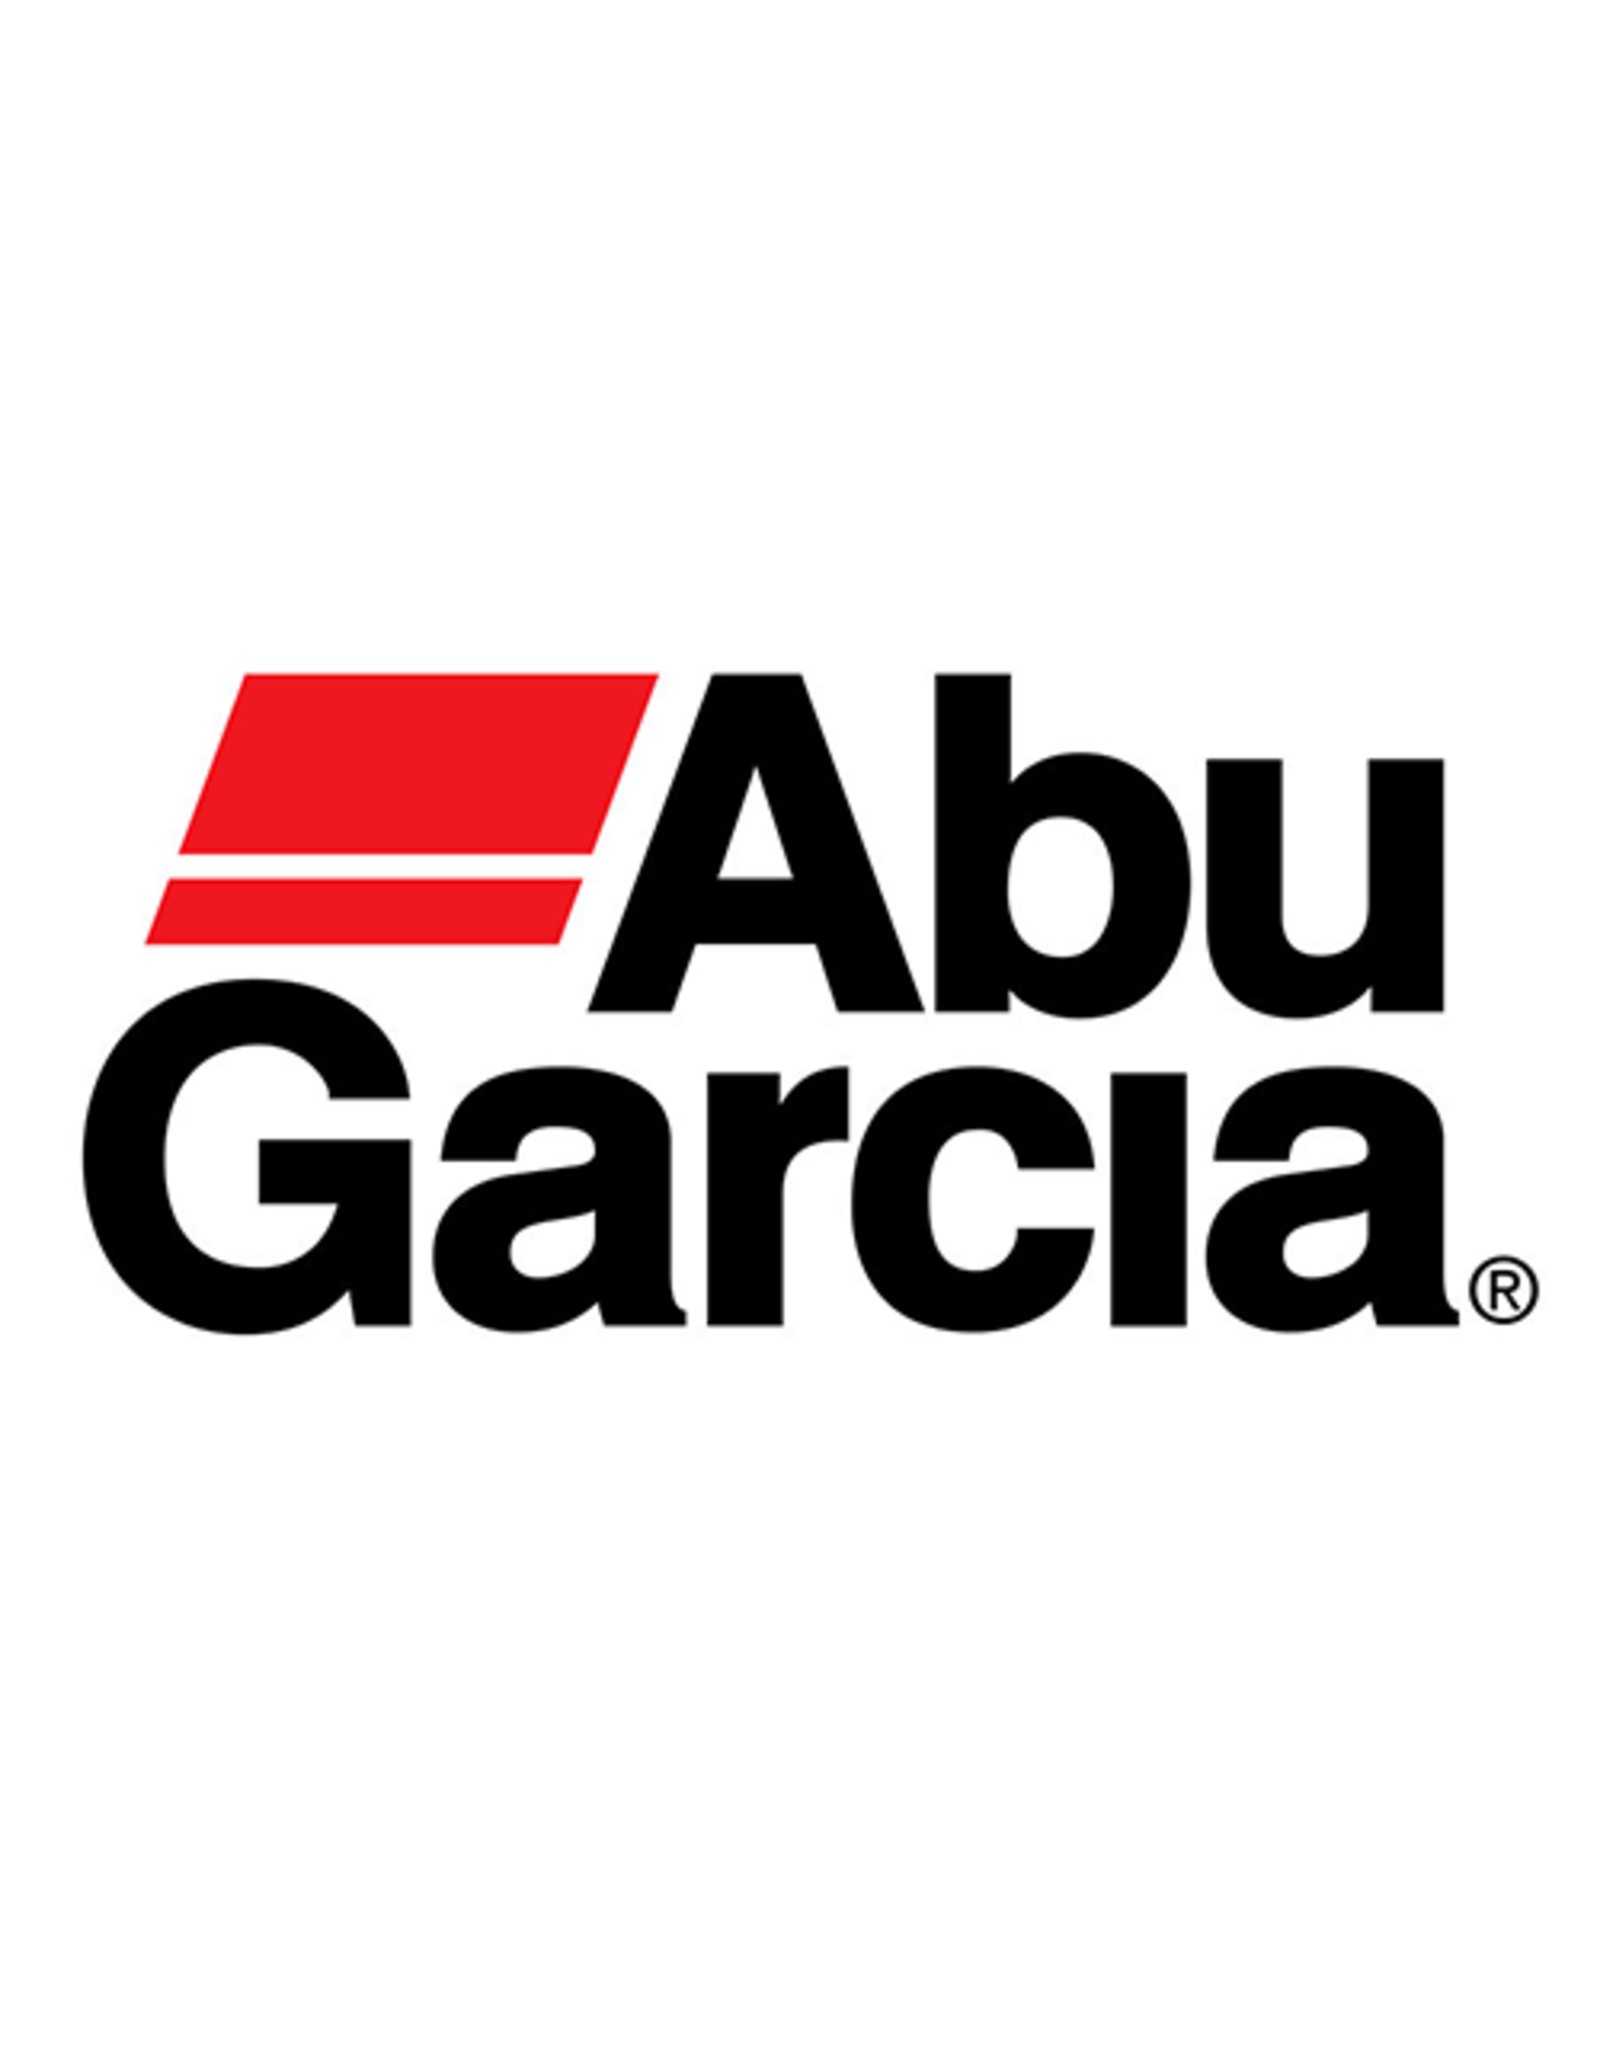 Abu Garcia 13091  LINE GUIDE PAWL